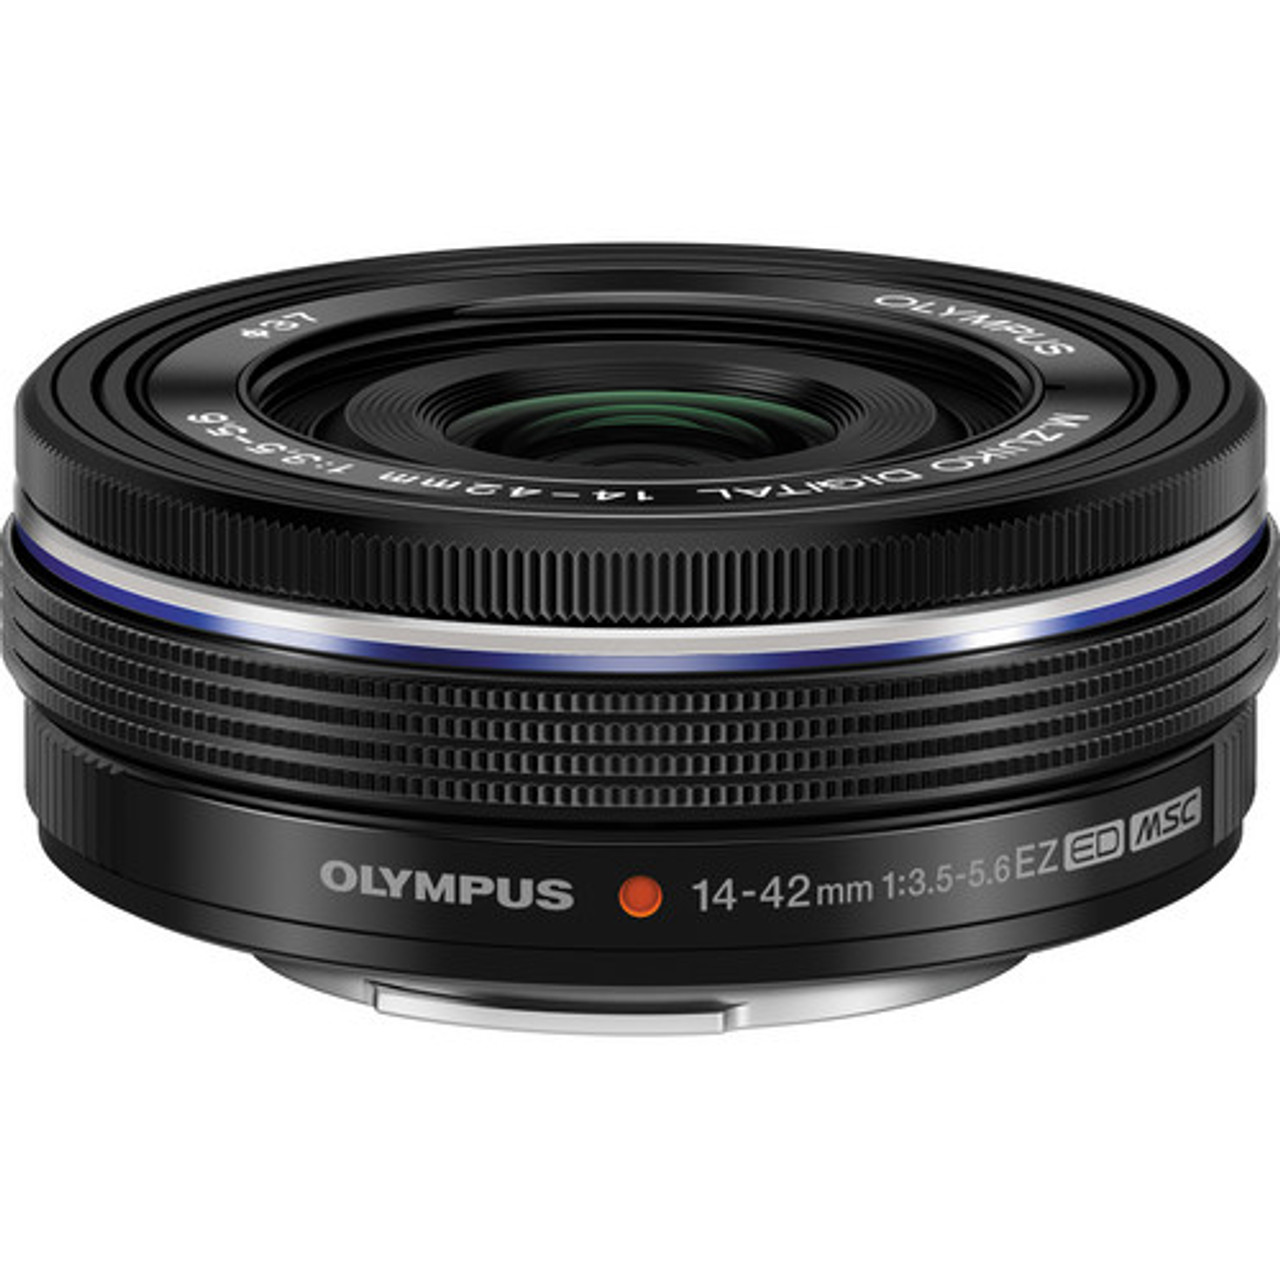 Olympus M.Zuiko Digital ED 14-42mm f/3.5-5.6 EZ Lens (Black